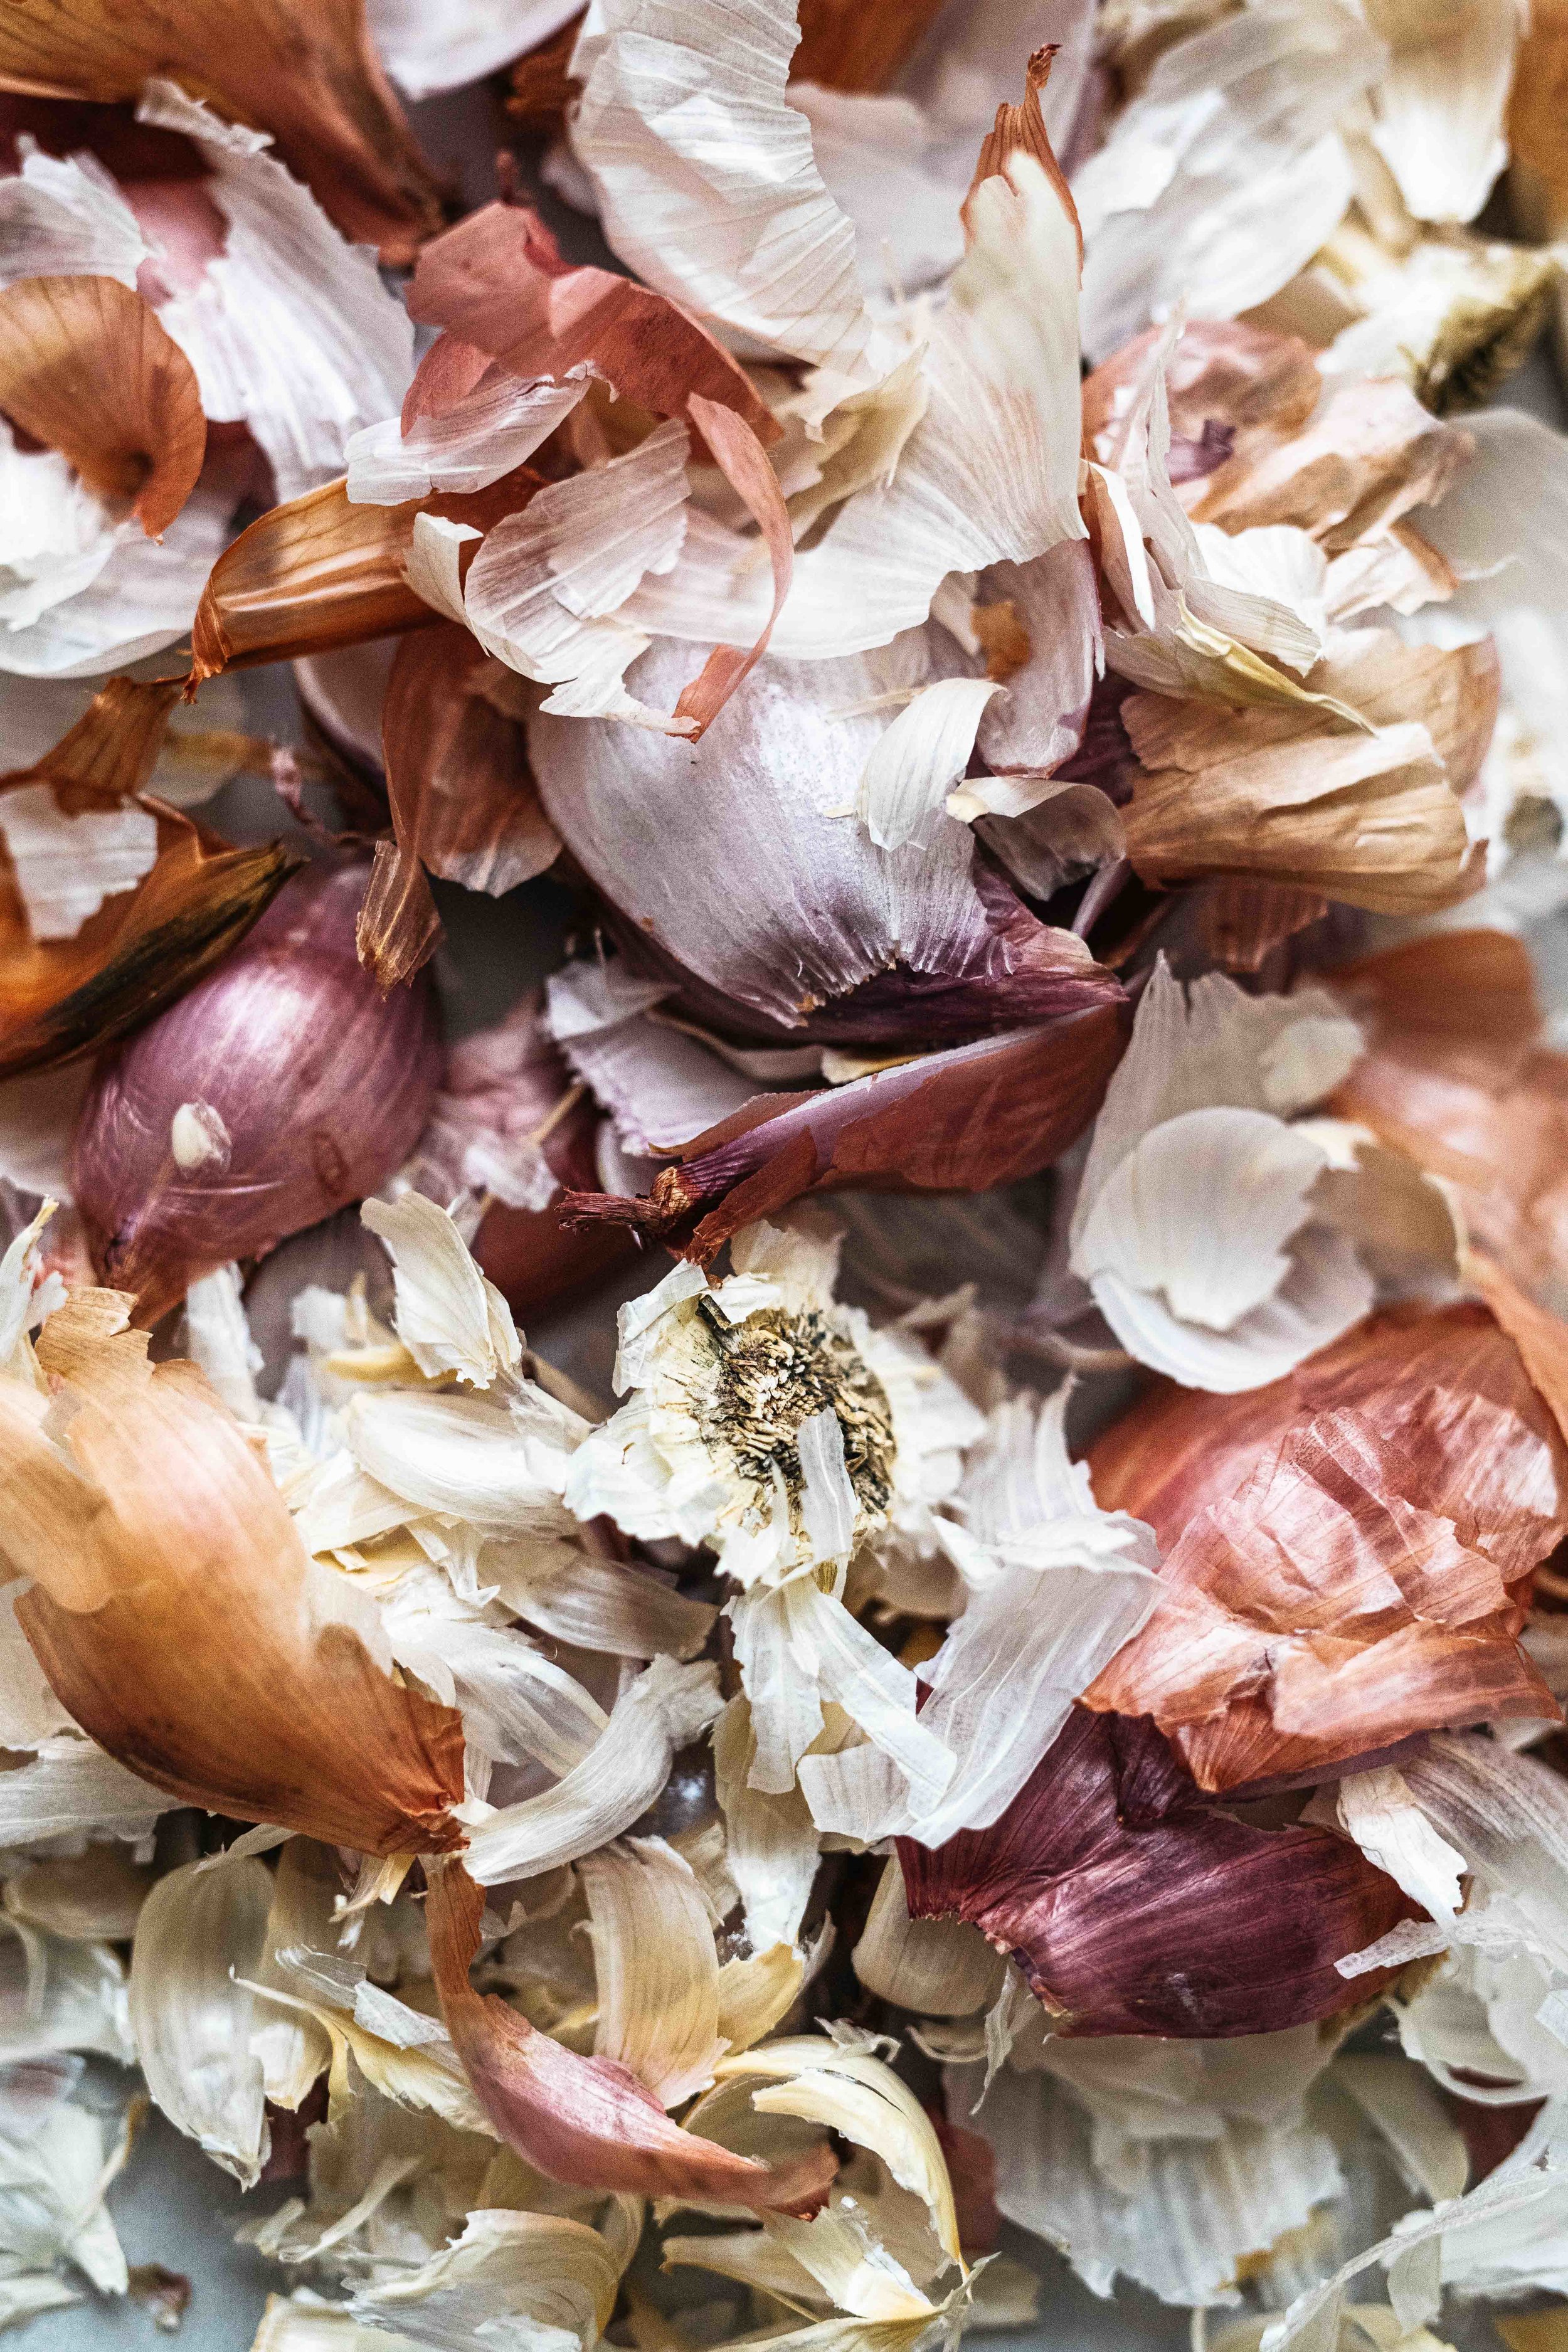 Garlic & Shallot Confit @chosenfoods @spiceology #garlictok #roastedg